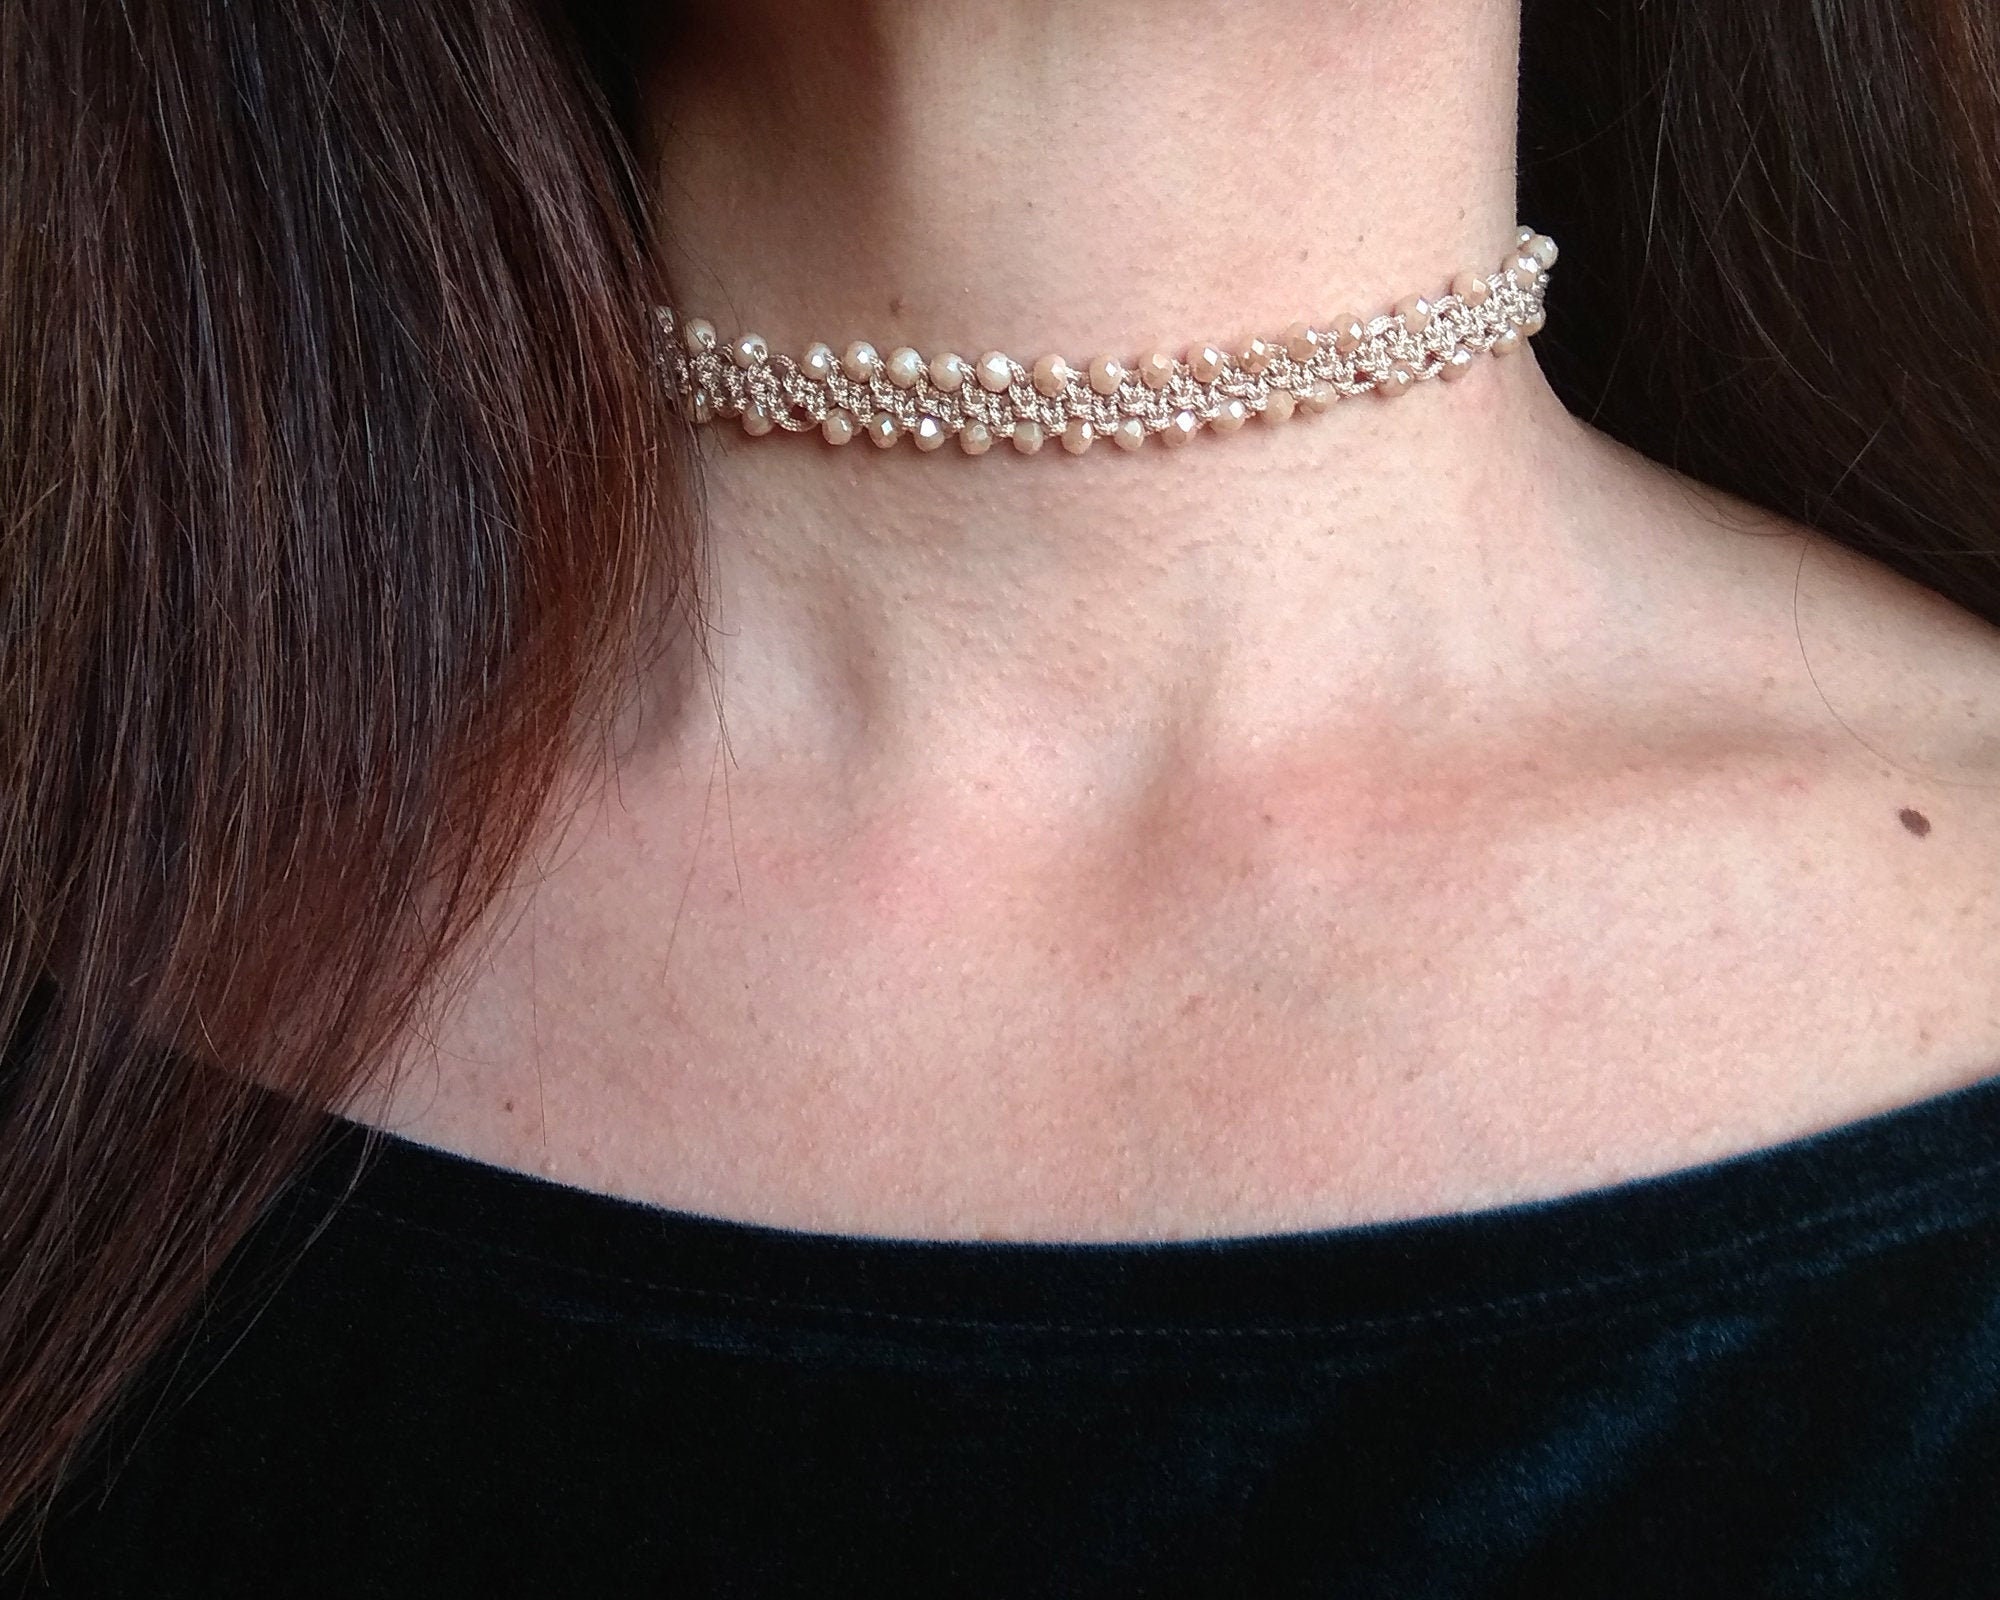 Lace Collar Necklace - Clear Drop Pendant